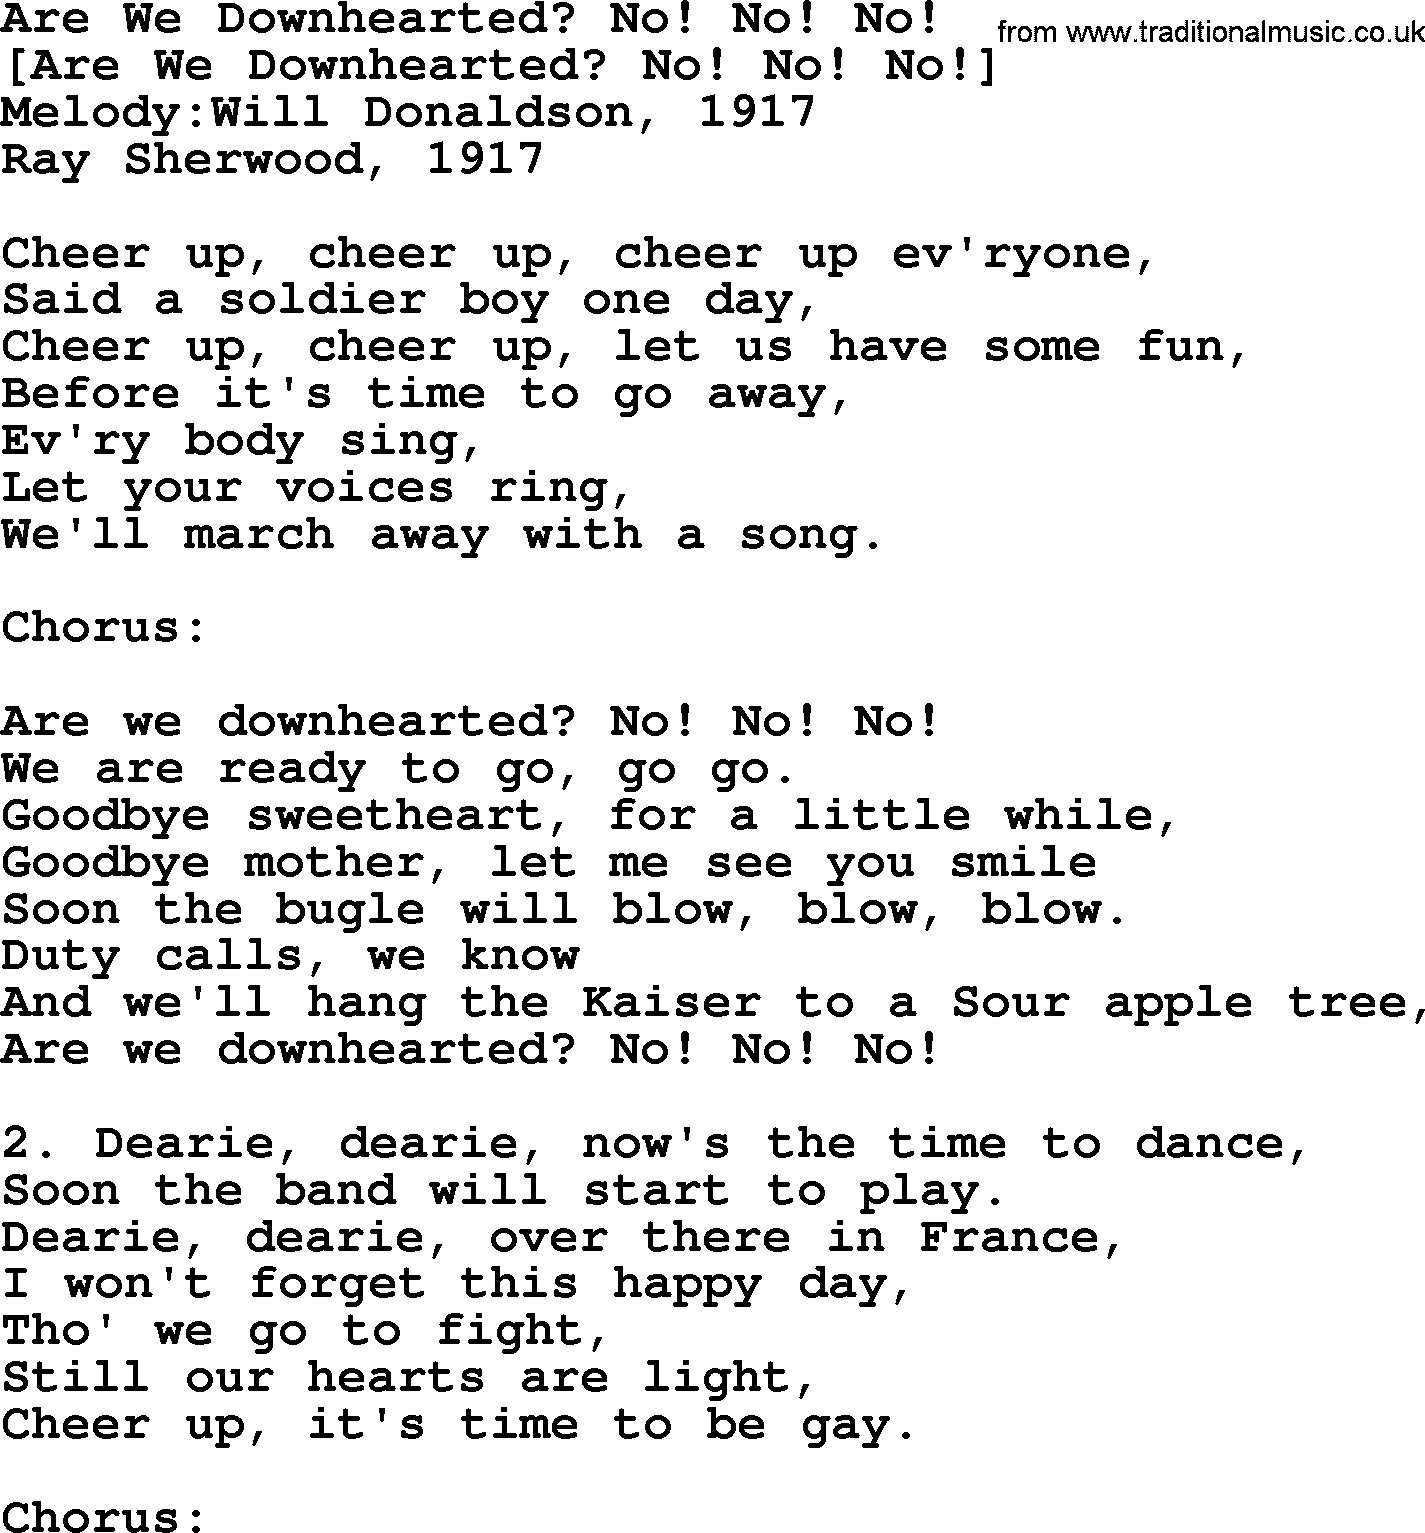 Old American Song: Are We Downhearted No! No! No!, lyrics